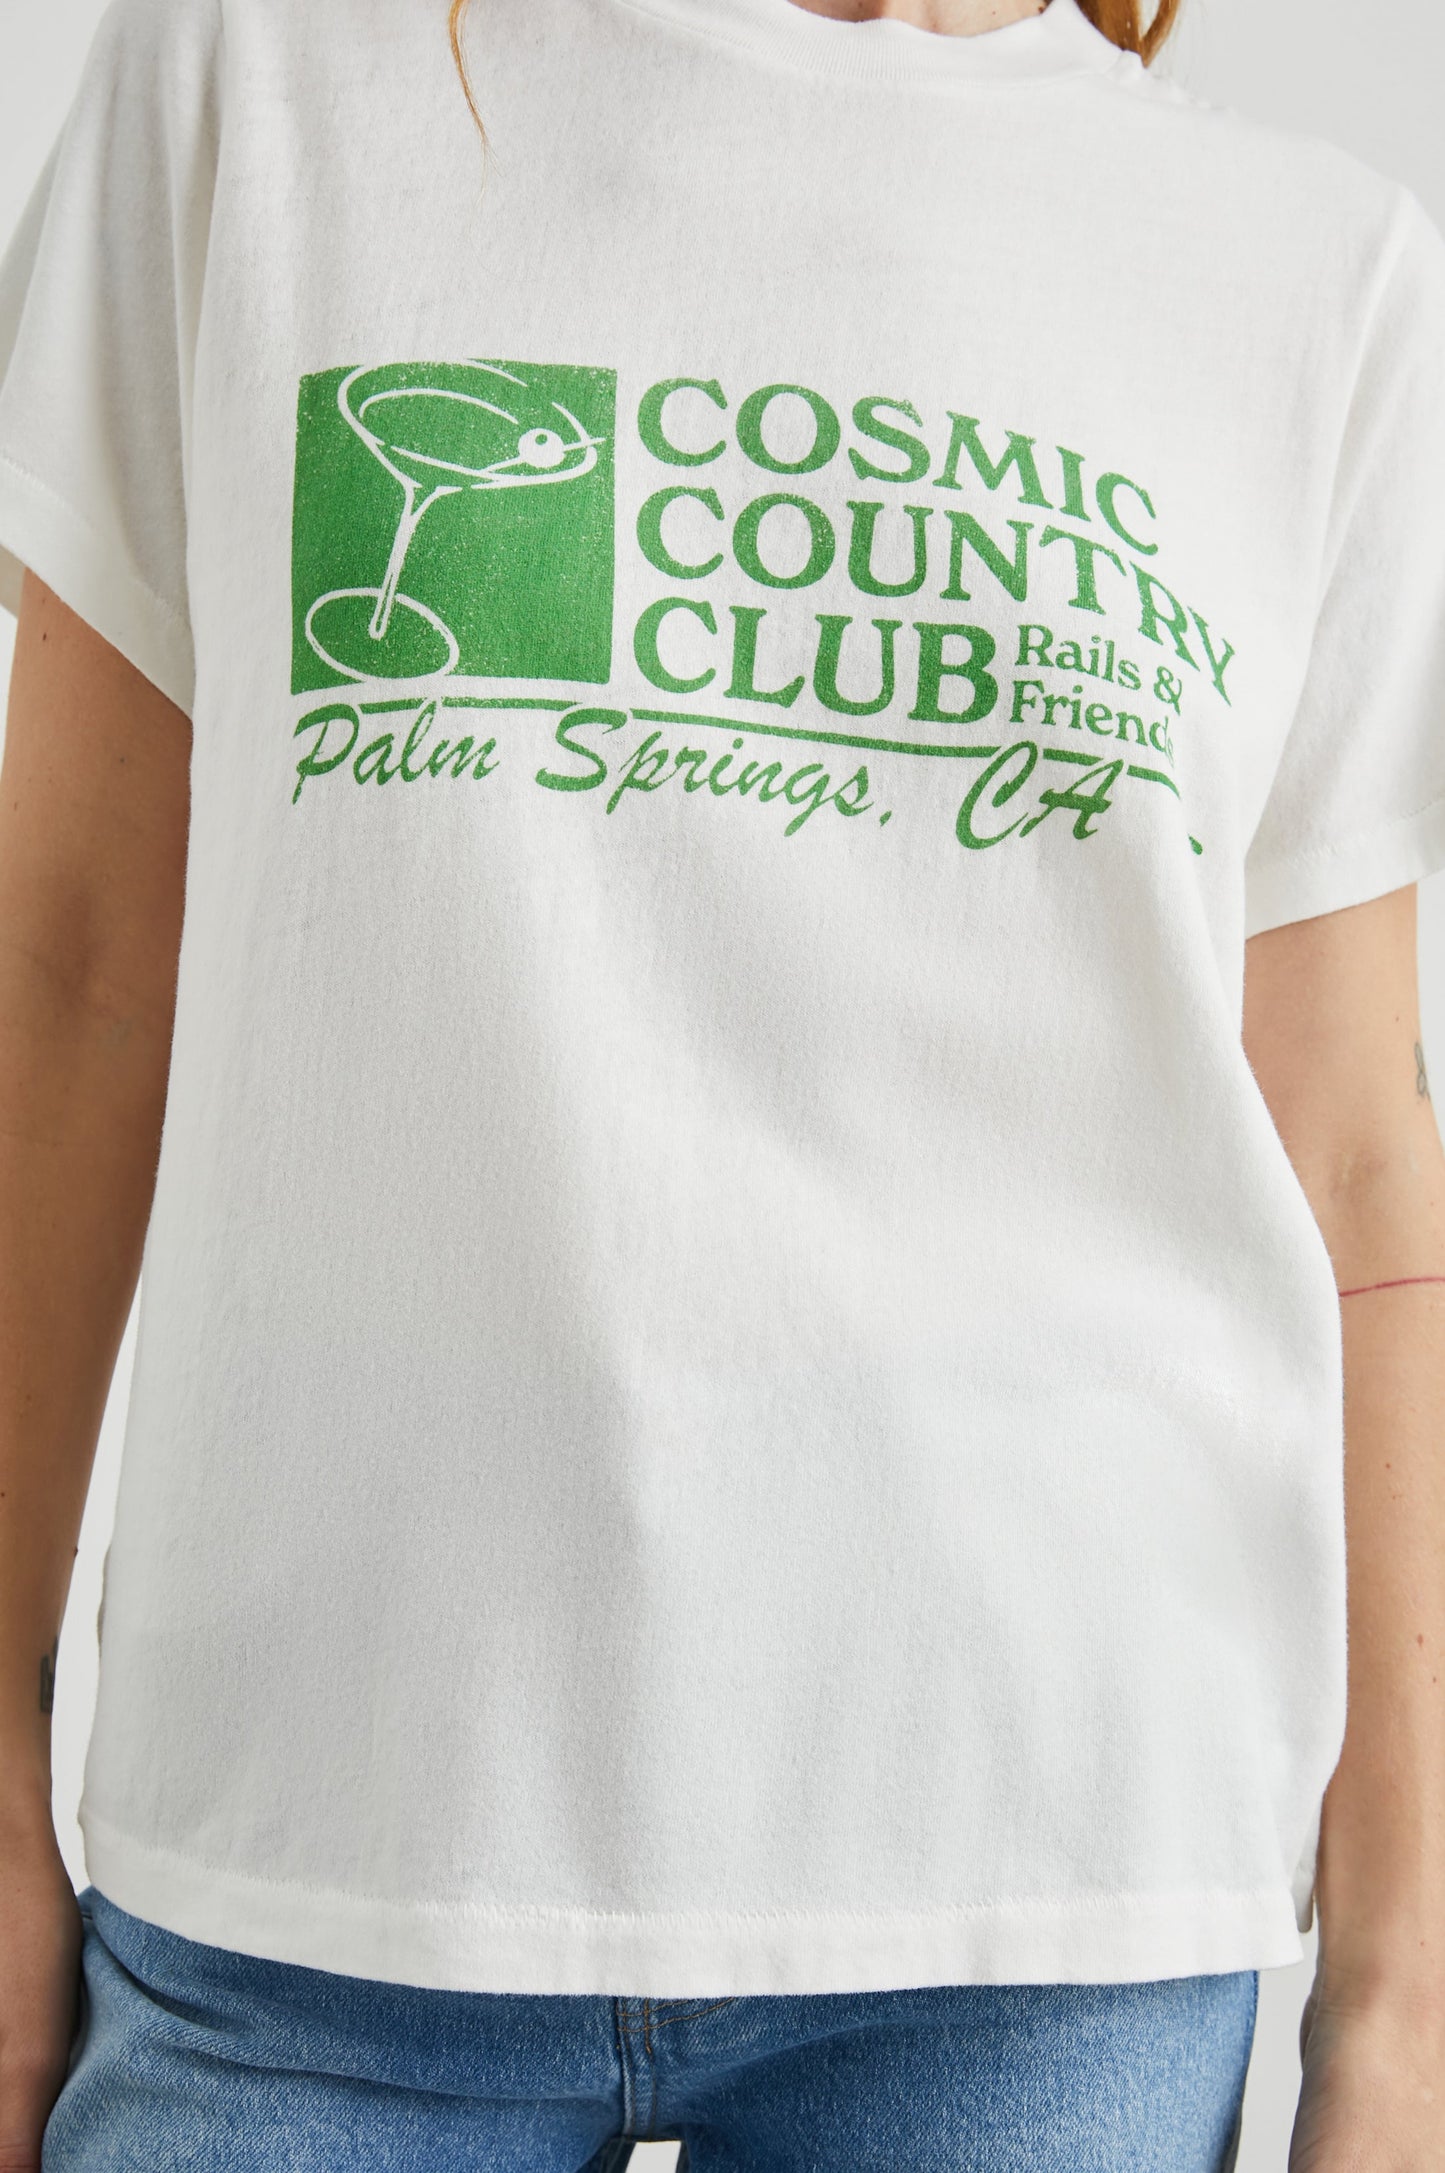 Rails Boyfriend T-Shirt, Cosmic Country Club